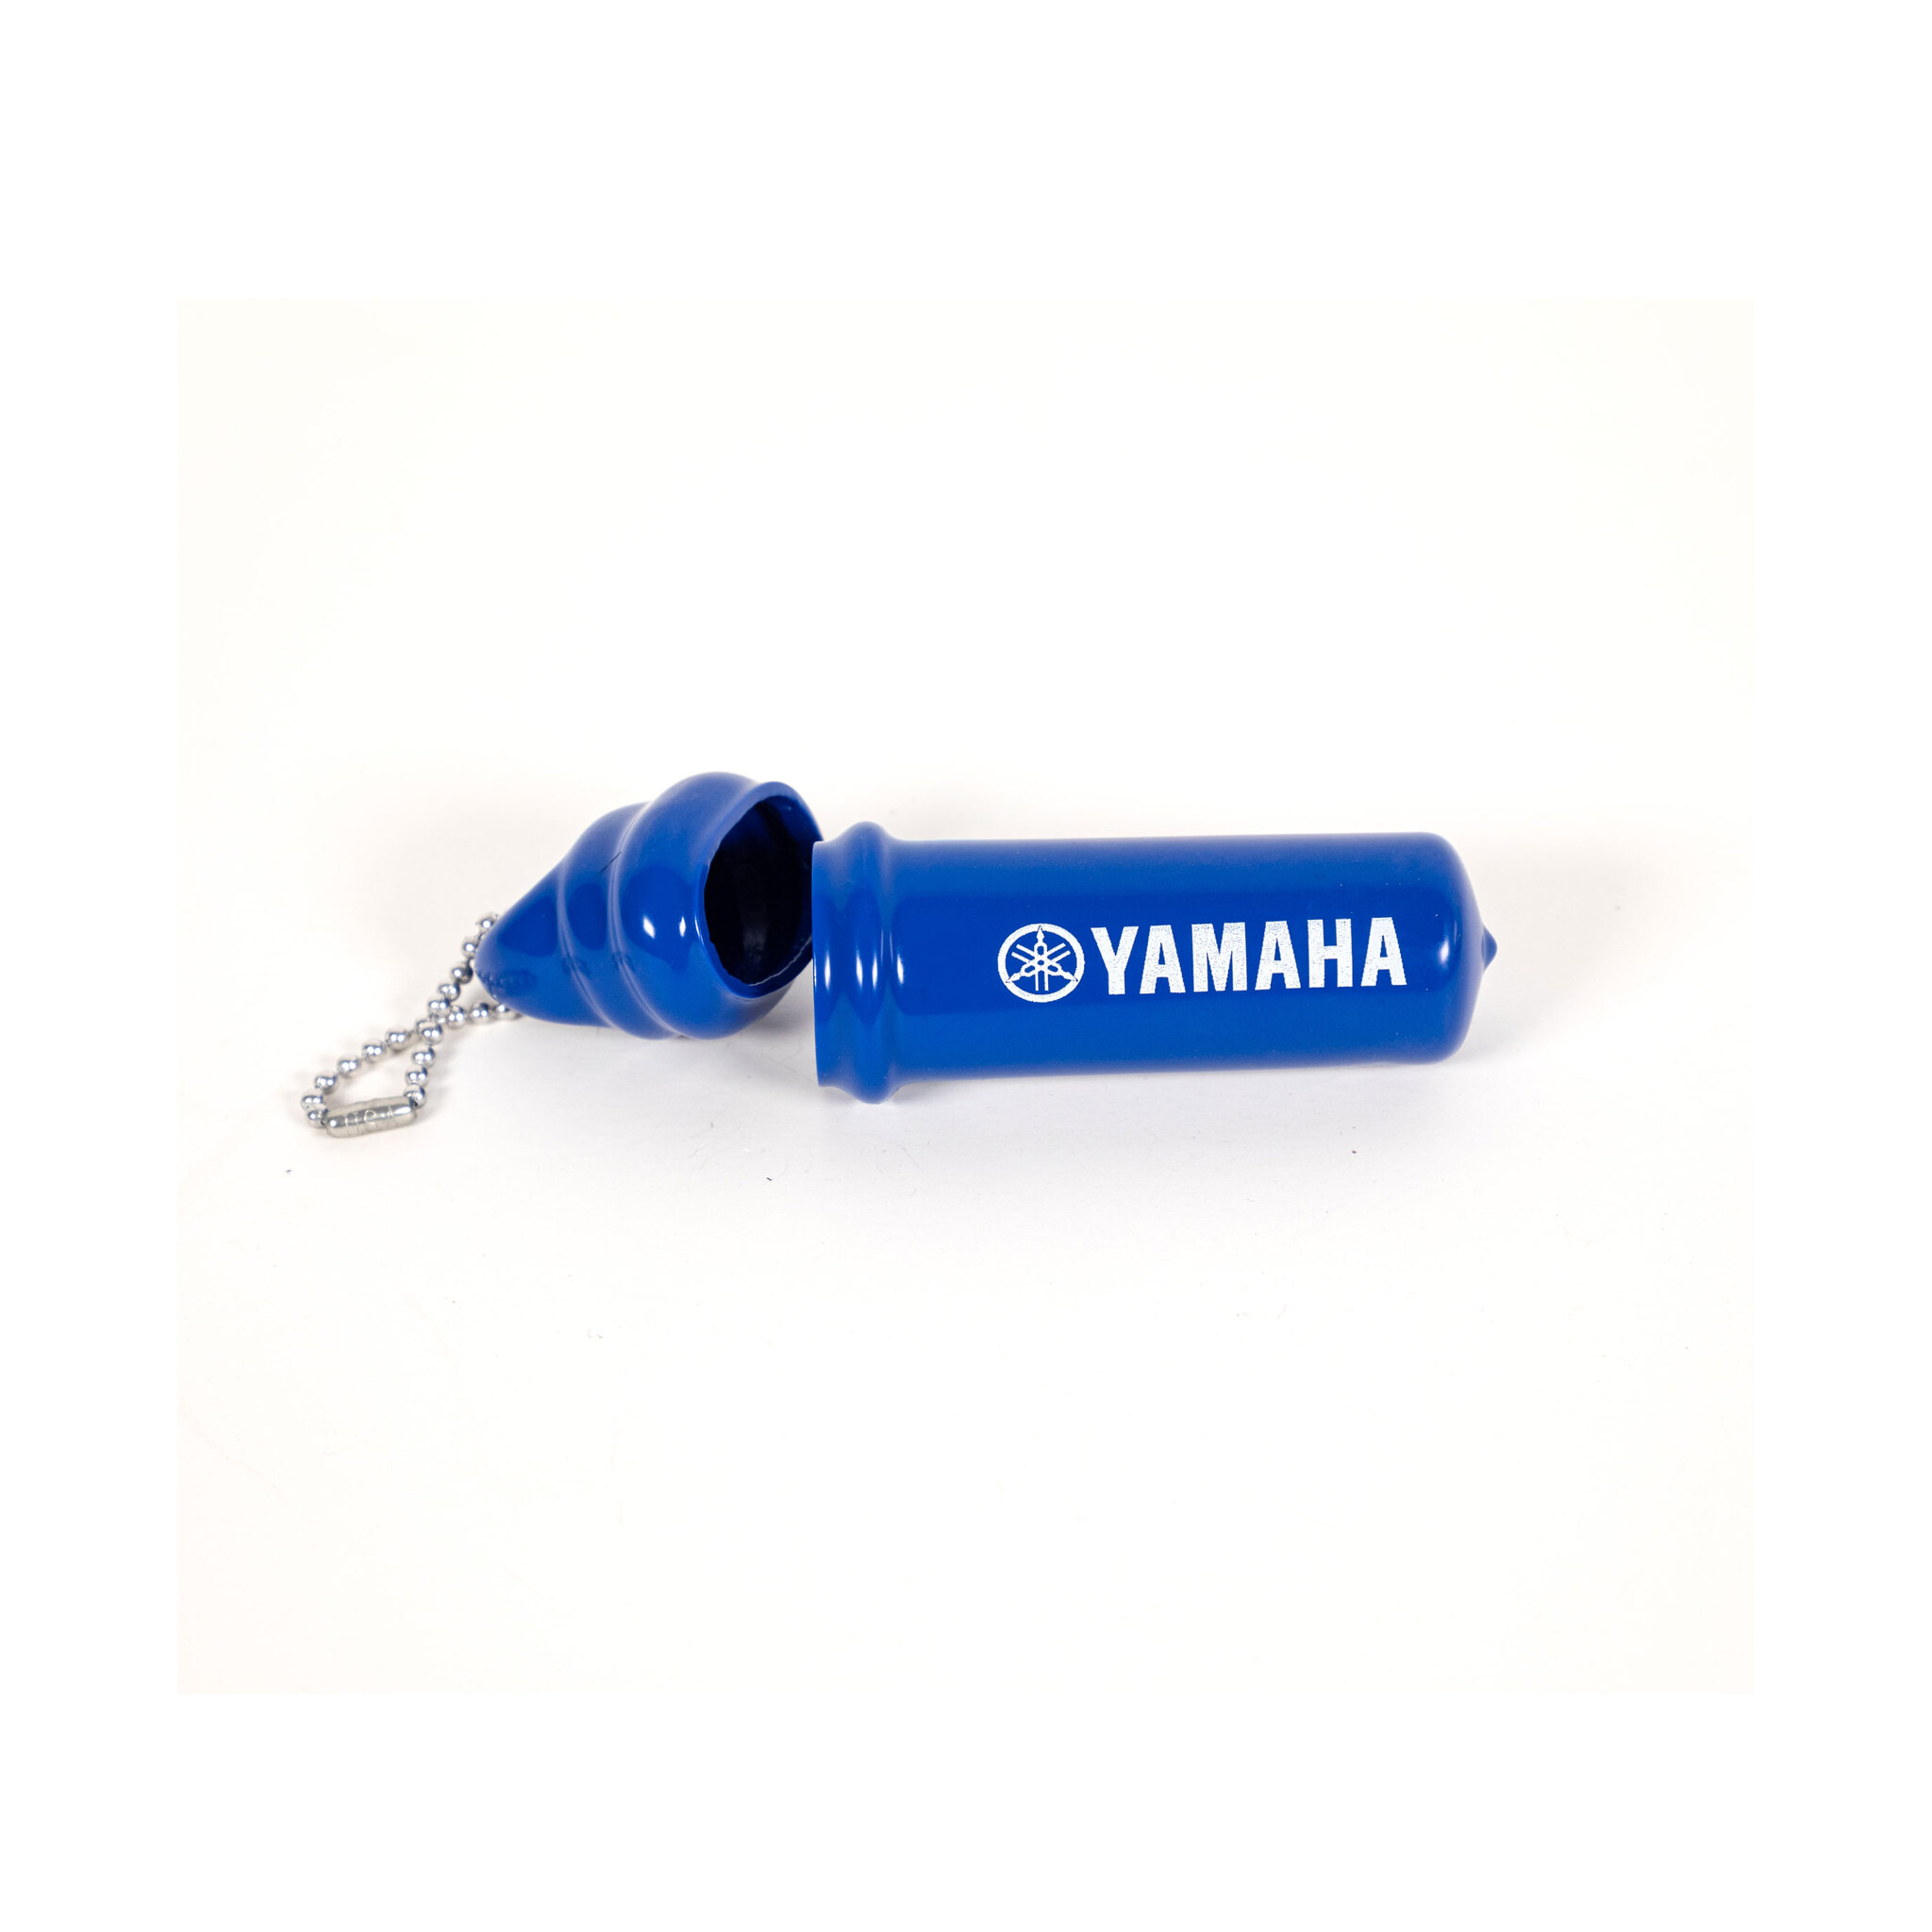 Yamaha Marine Keychain